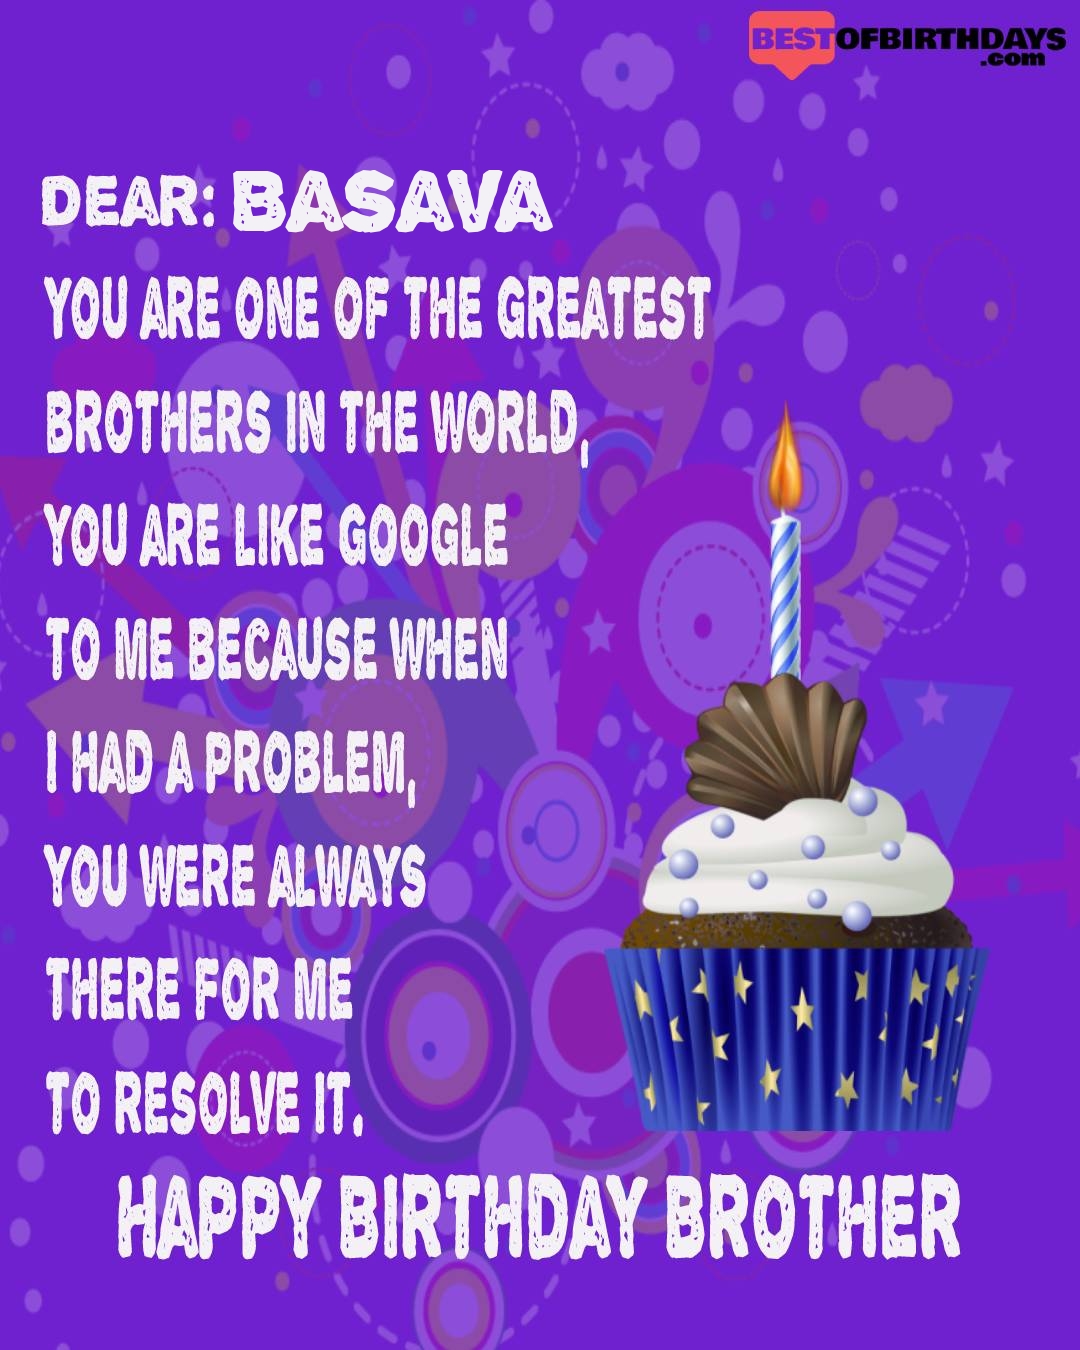 Happy birthday basava bhai brother bro